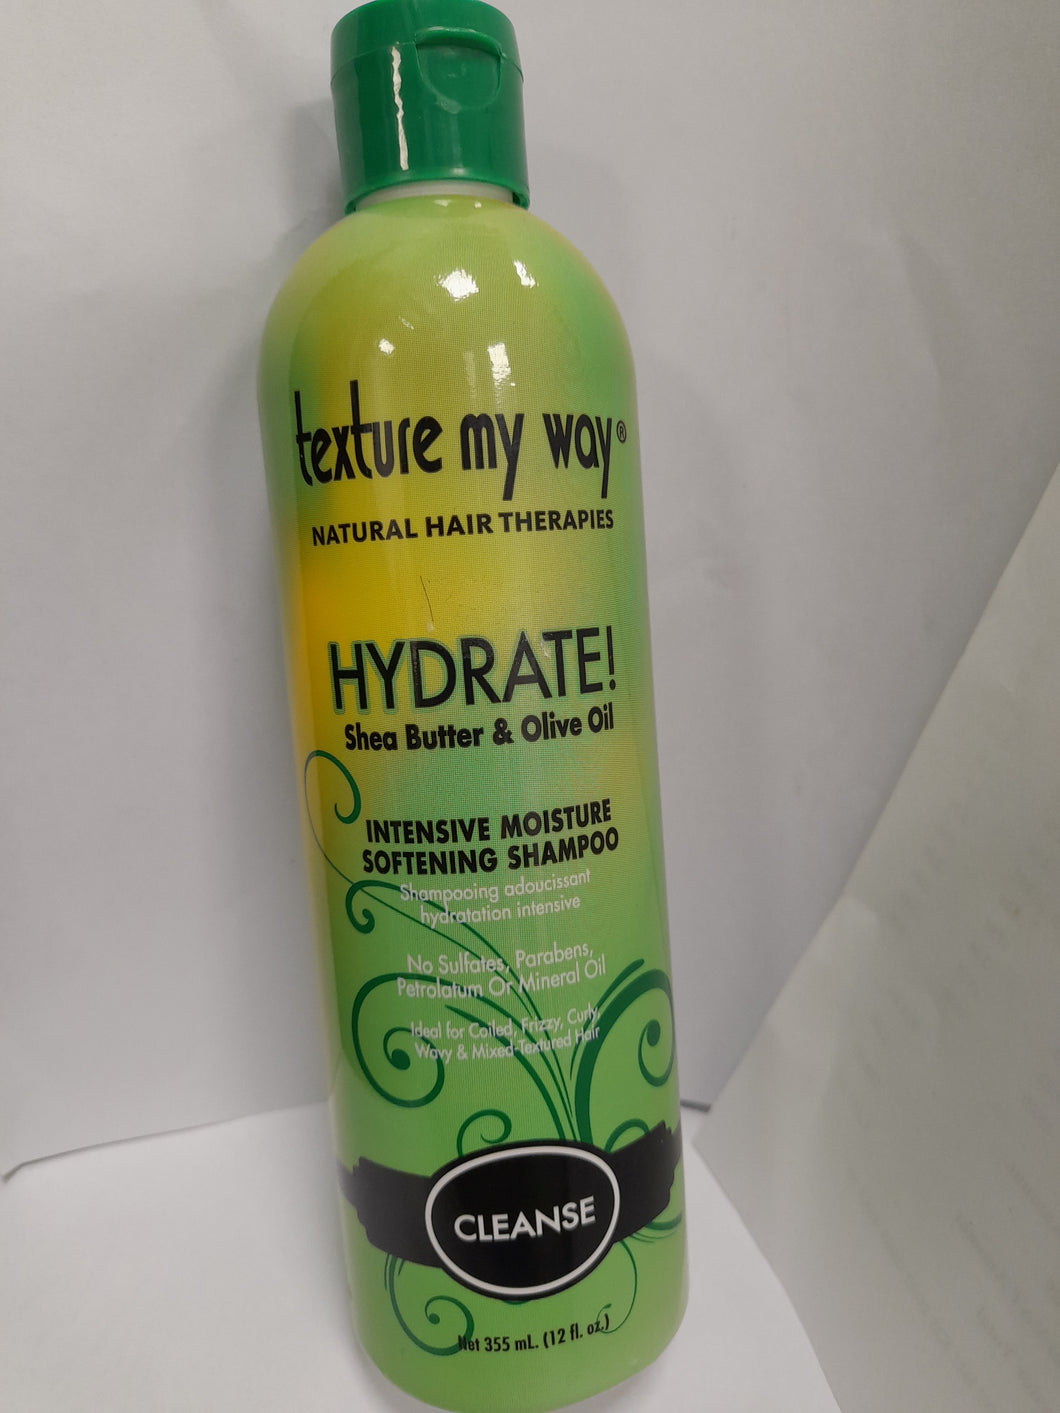 Texture My Way Hydrate Intensive Moisture Softening Shampoo